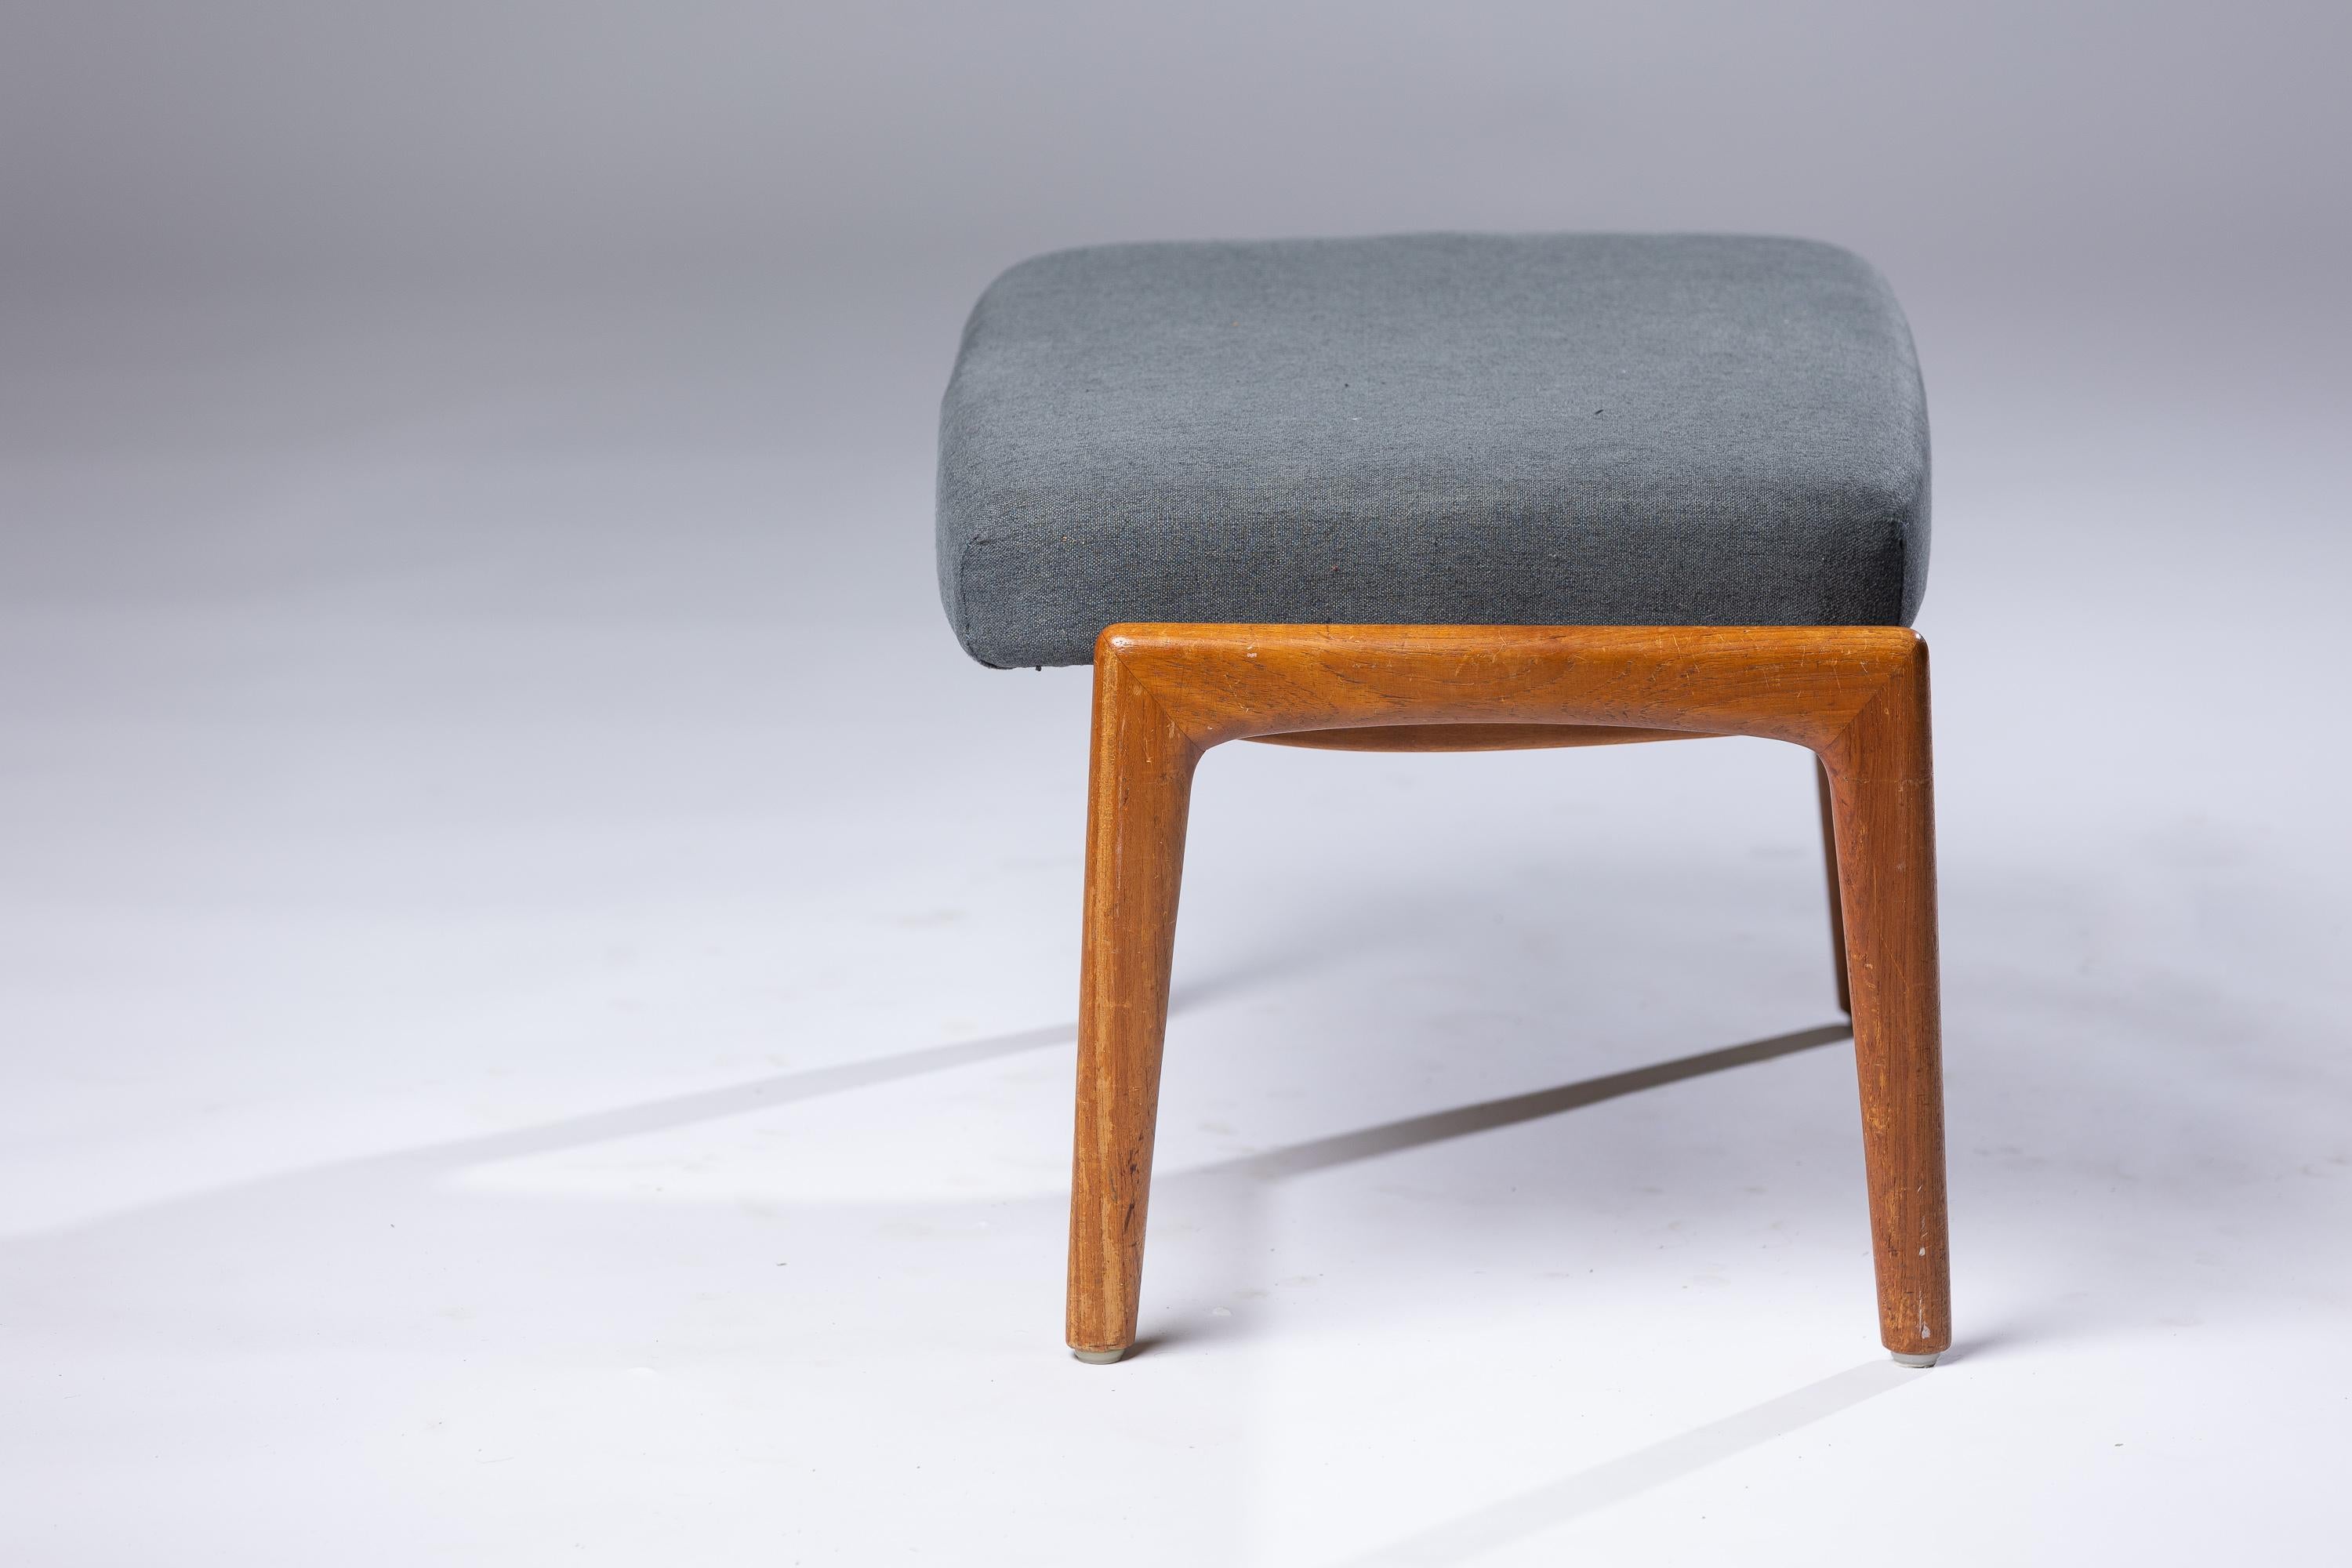 Swedish Scandinavian Modern stool from Folke Ohlsson 